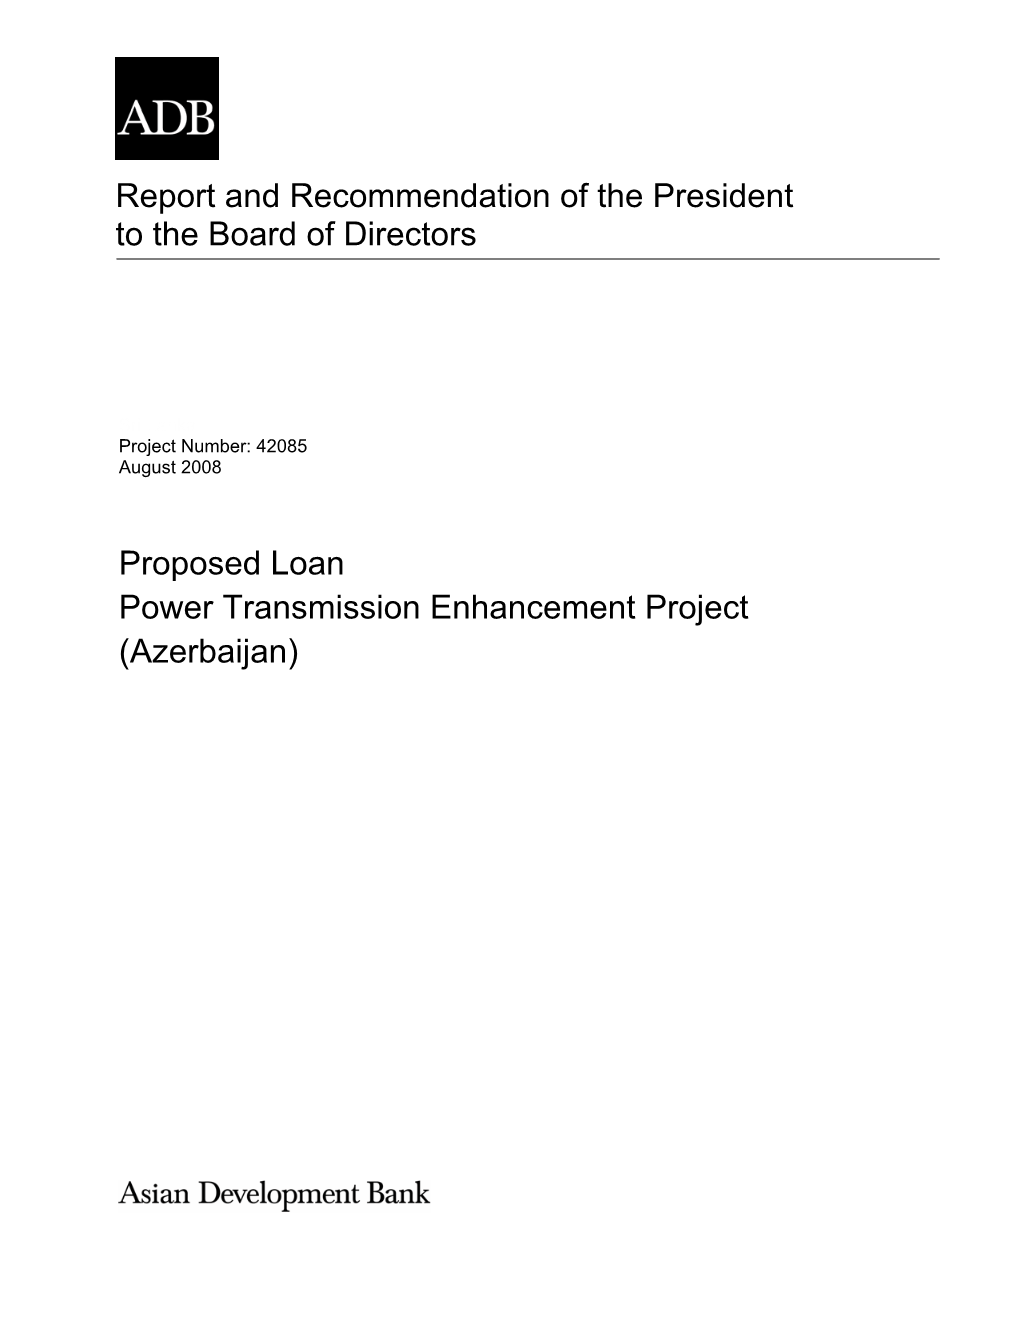 Proposed Loan Power Transmission Enhancement Project (Azerbaijan)